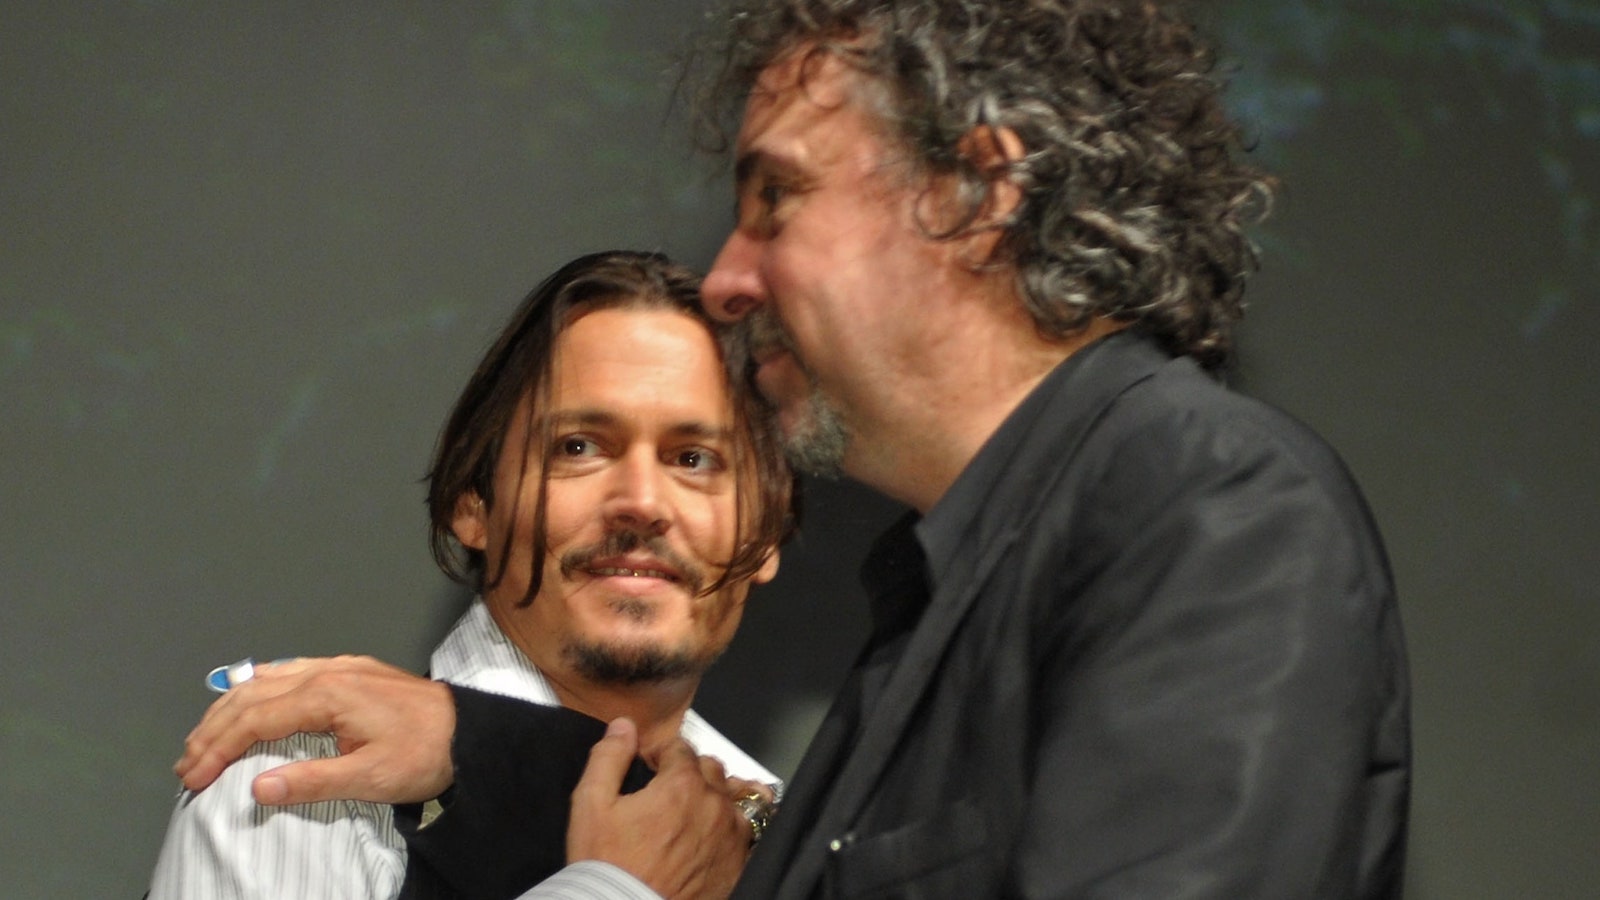 Tim Burton: in arrivo una docu-serie sul regista con Johnny Depp e Helena Bonham Carter